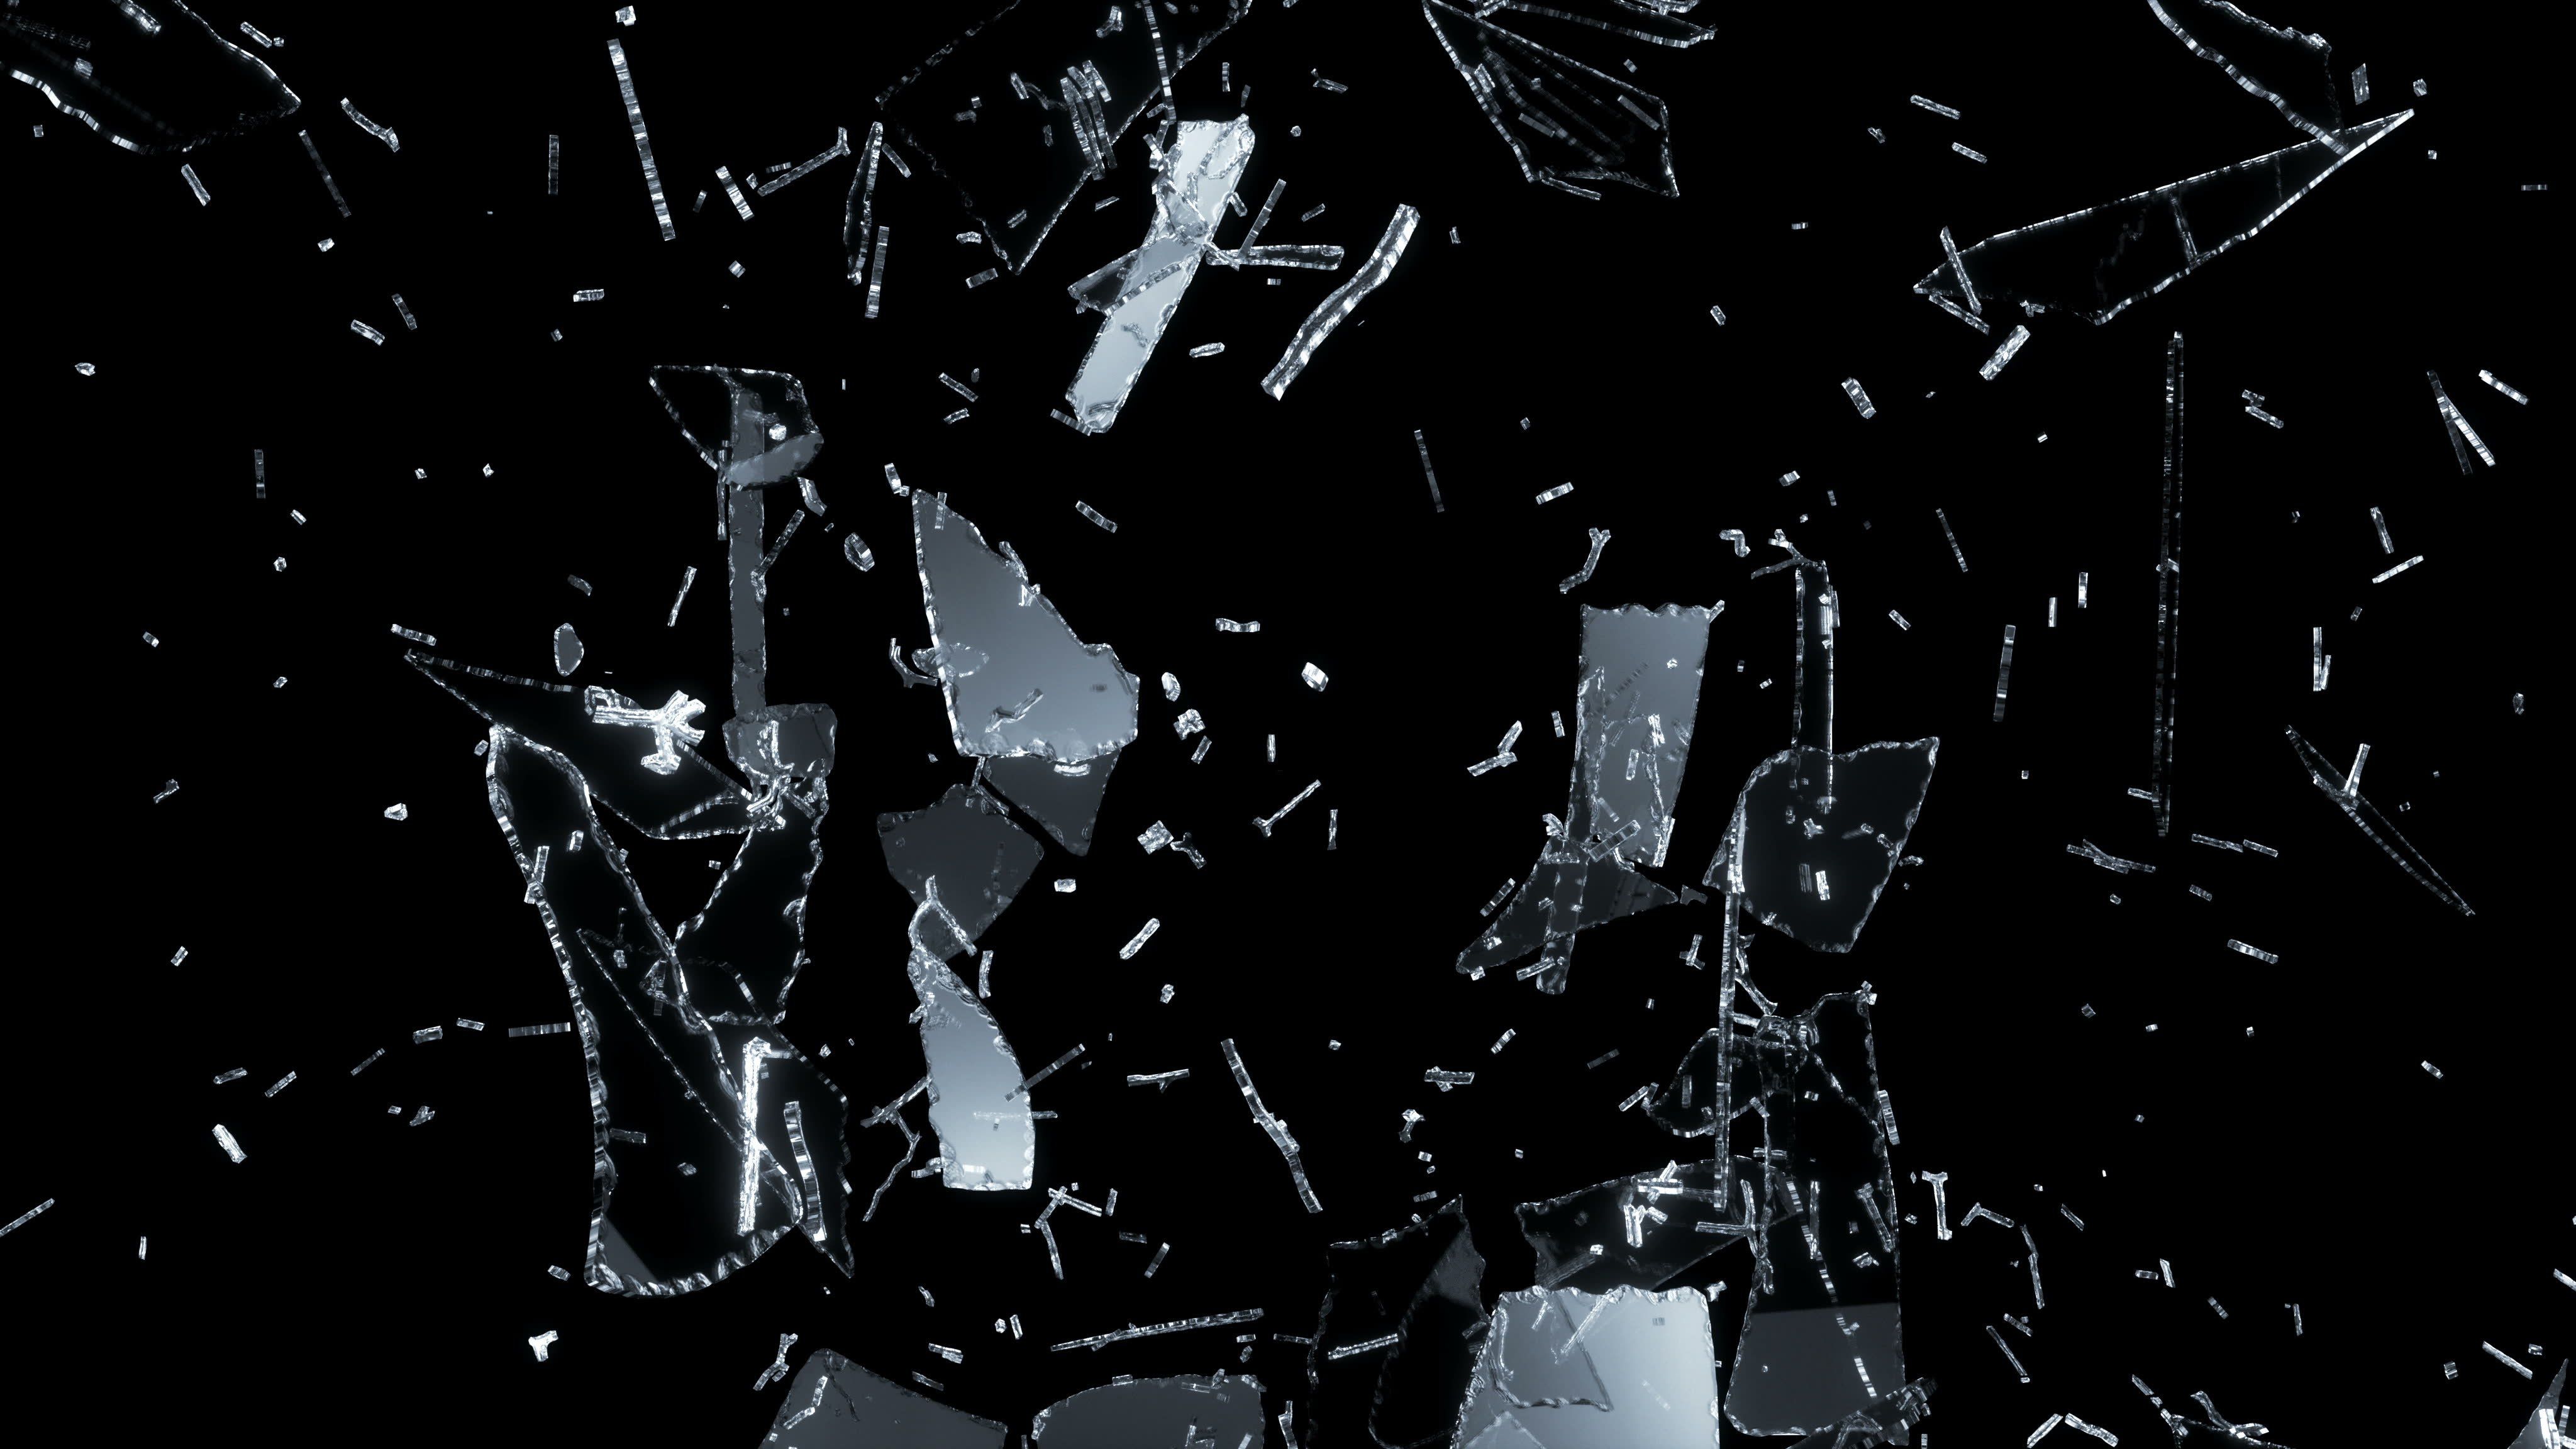 Abstract Broken Glass Wallpapers